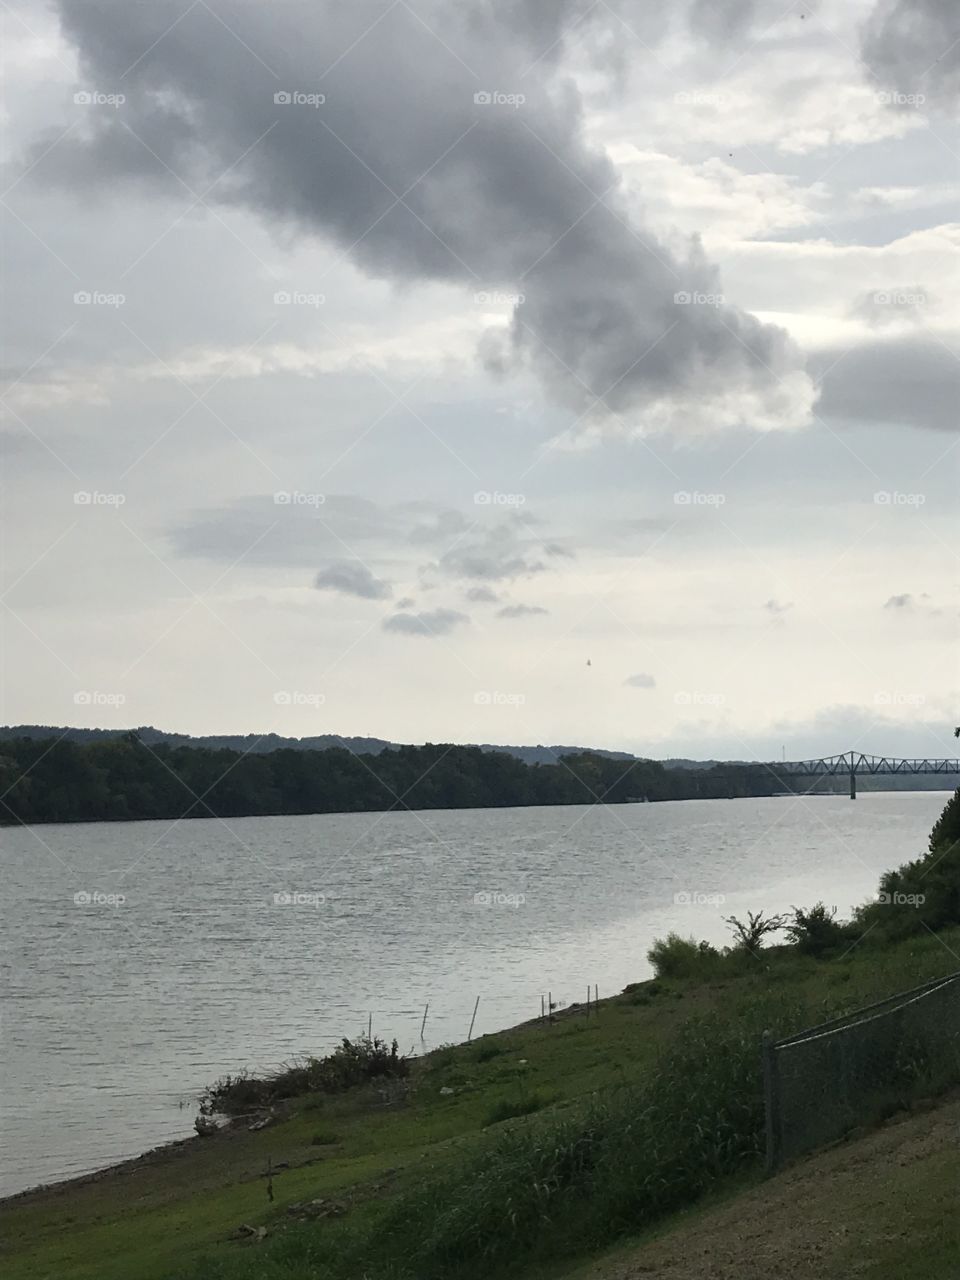 Ohio river from Chesapeake’s view 